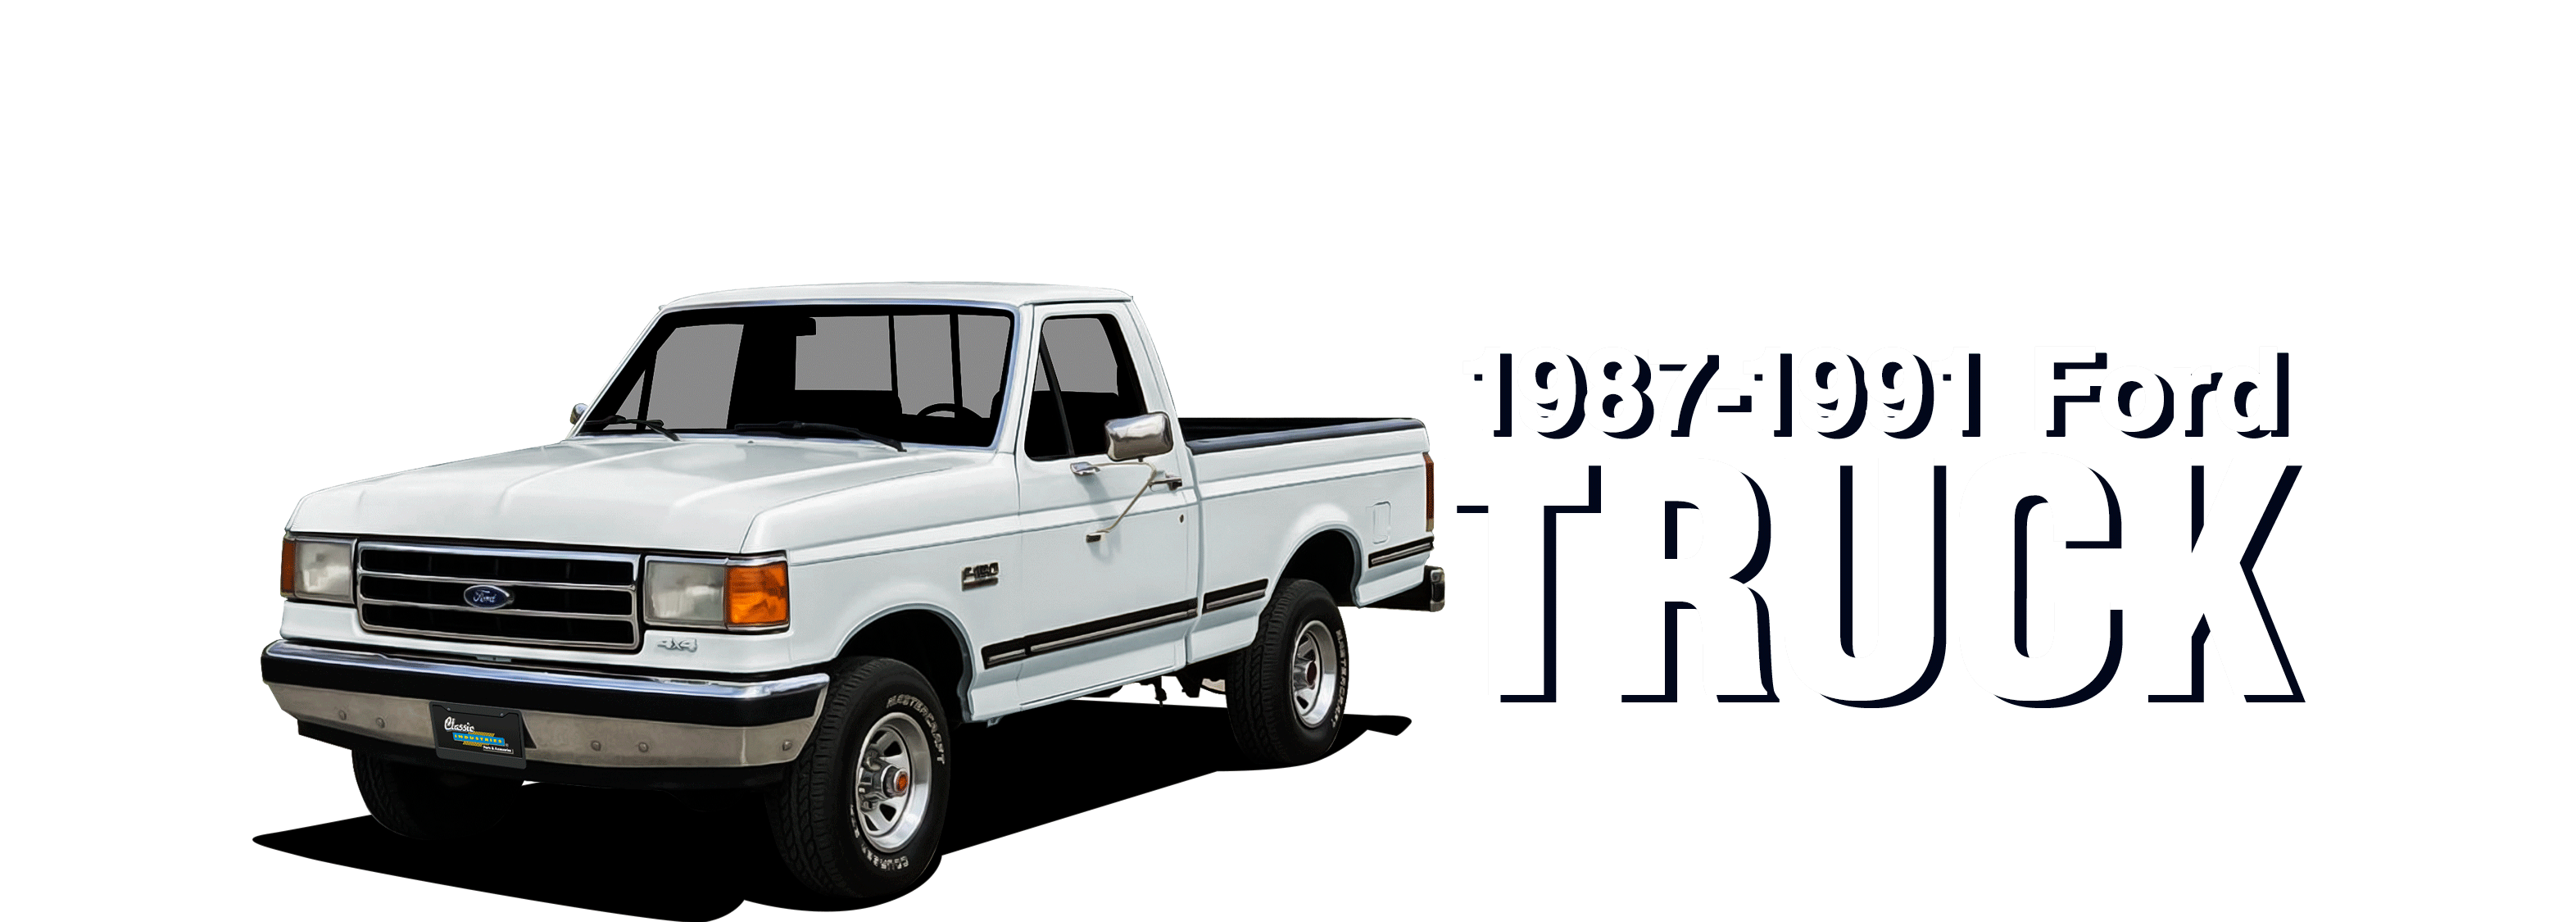 87-91FordTruck-vehicle-desktop